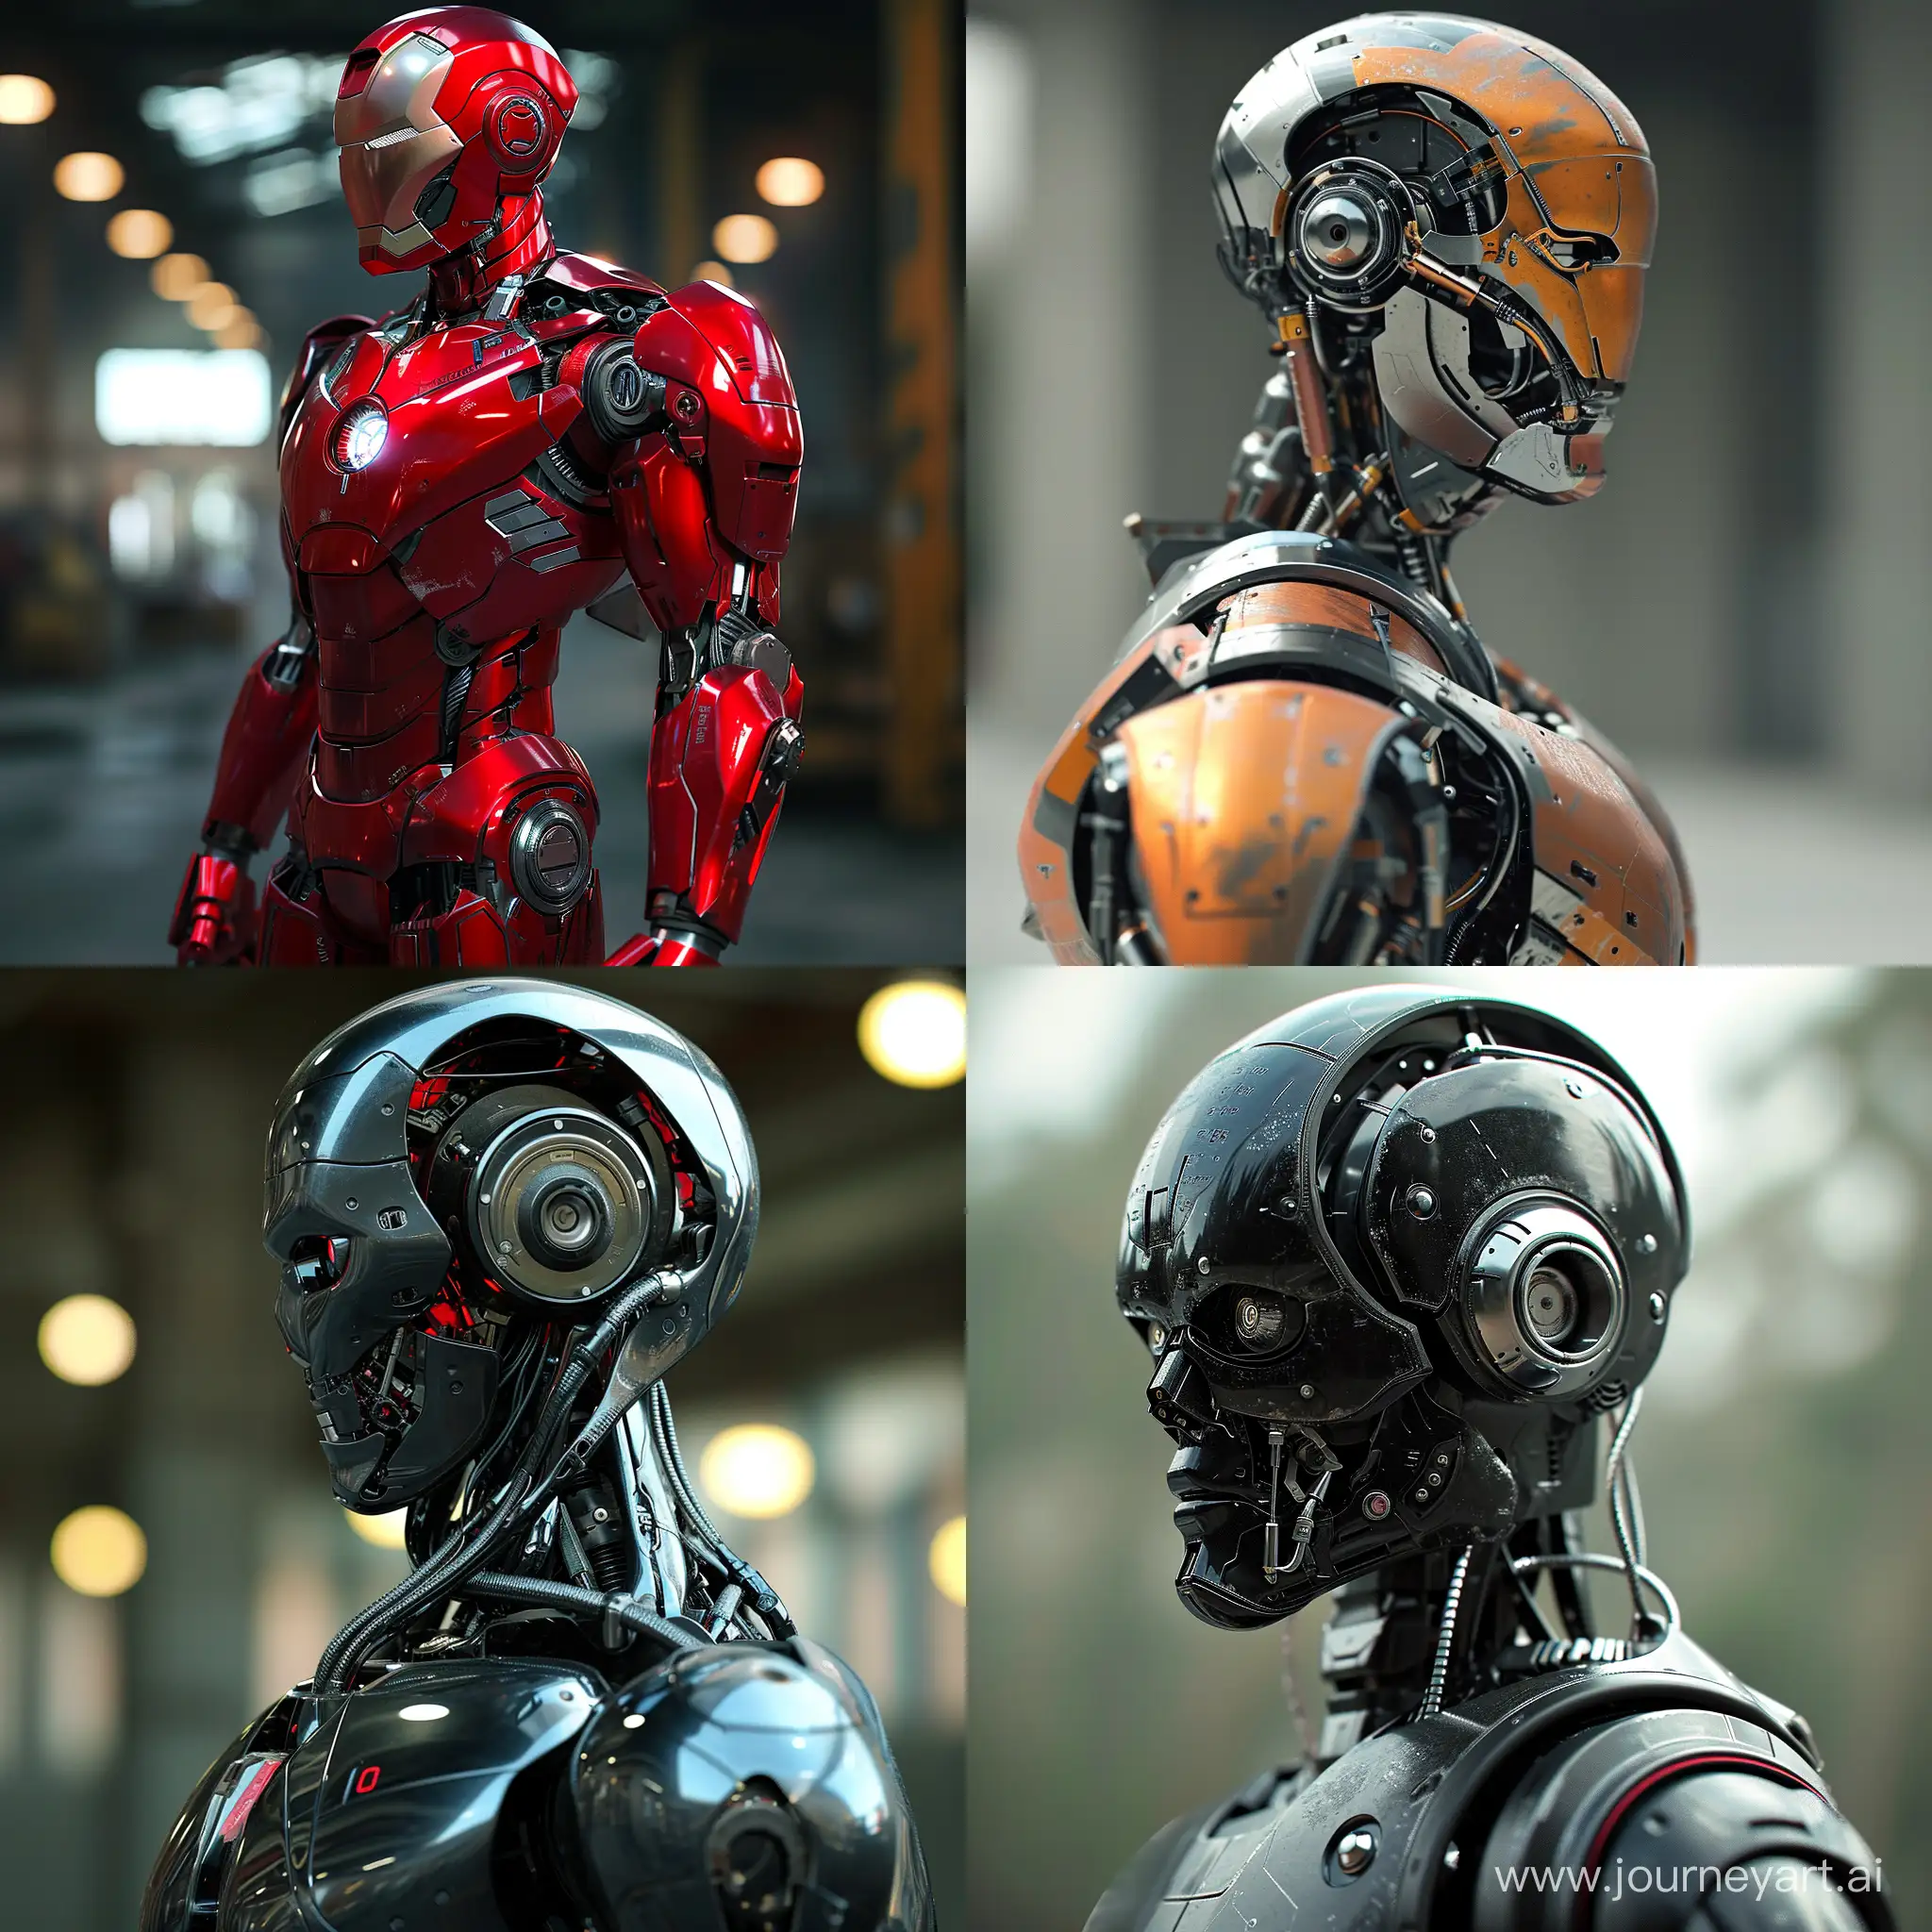 Futuristic-Robot-Man-Model-Version-6-in-Augmented-Reality-SciFi-3019